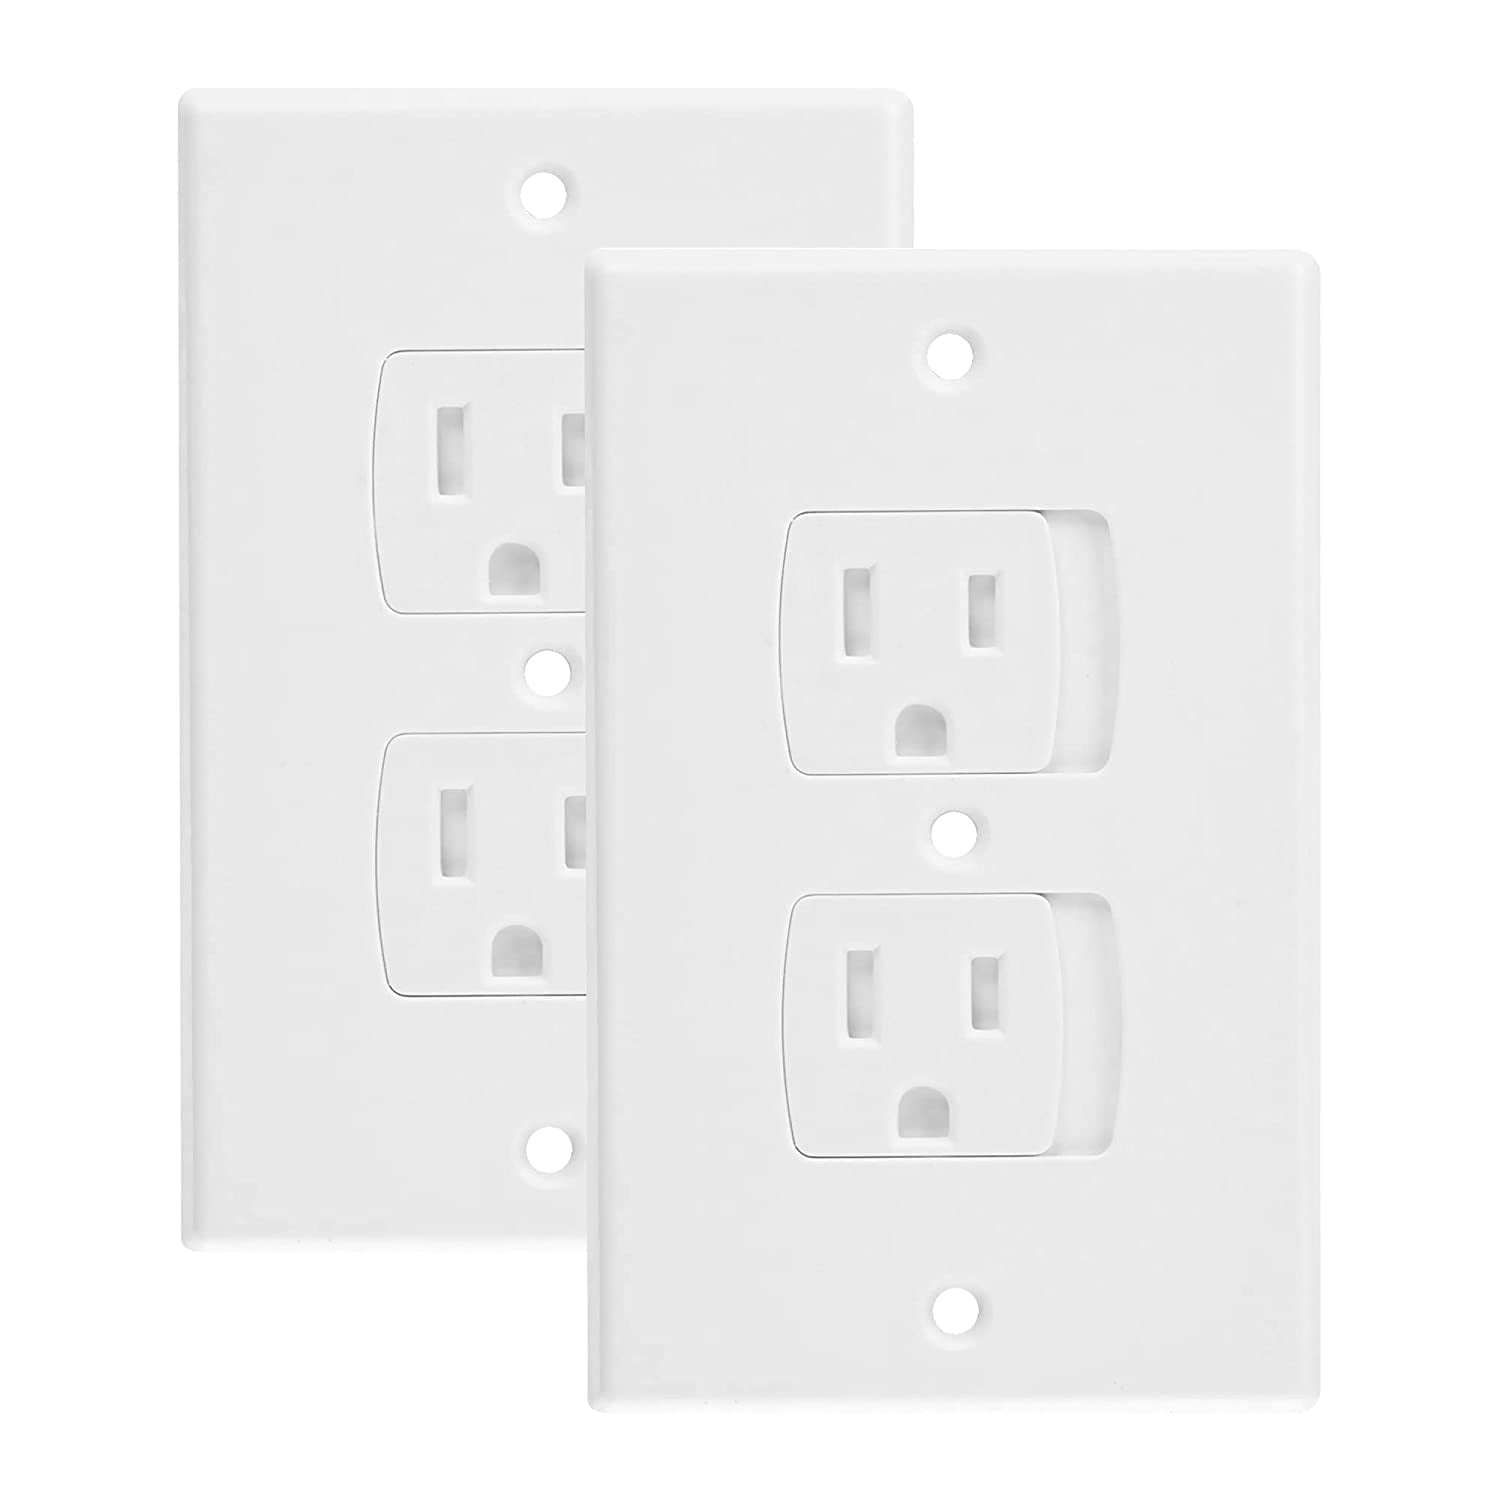 2 Prong Outlet Plug Covers Udgital Socket Safety Cover,12 Count,6 Piece 3 Prong Outlet Plug Covers,6 Piece